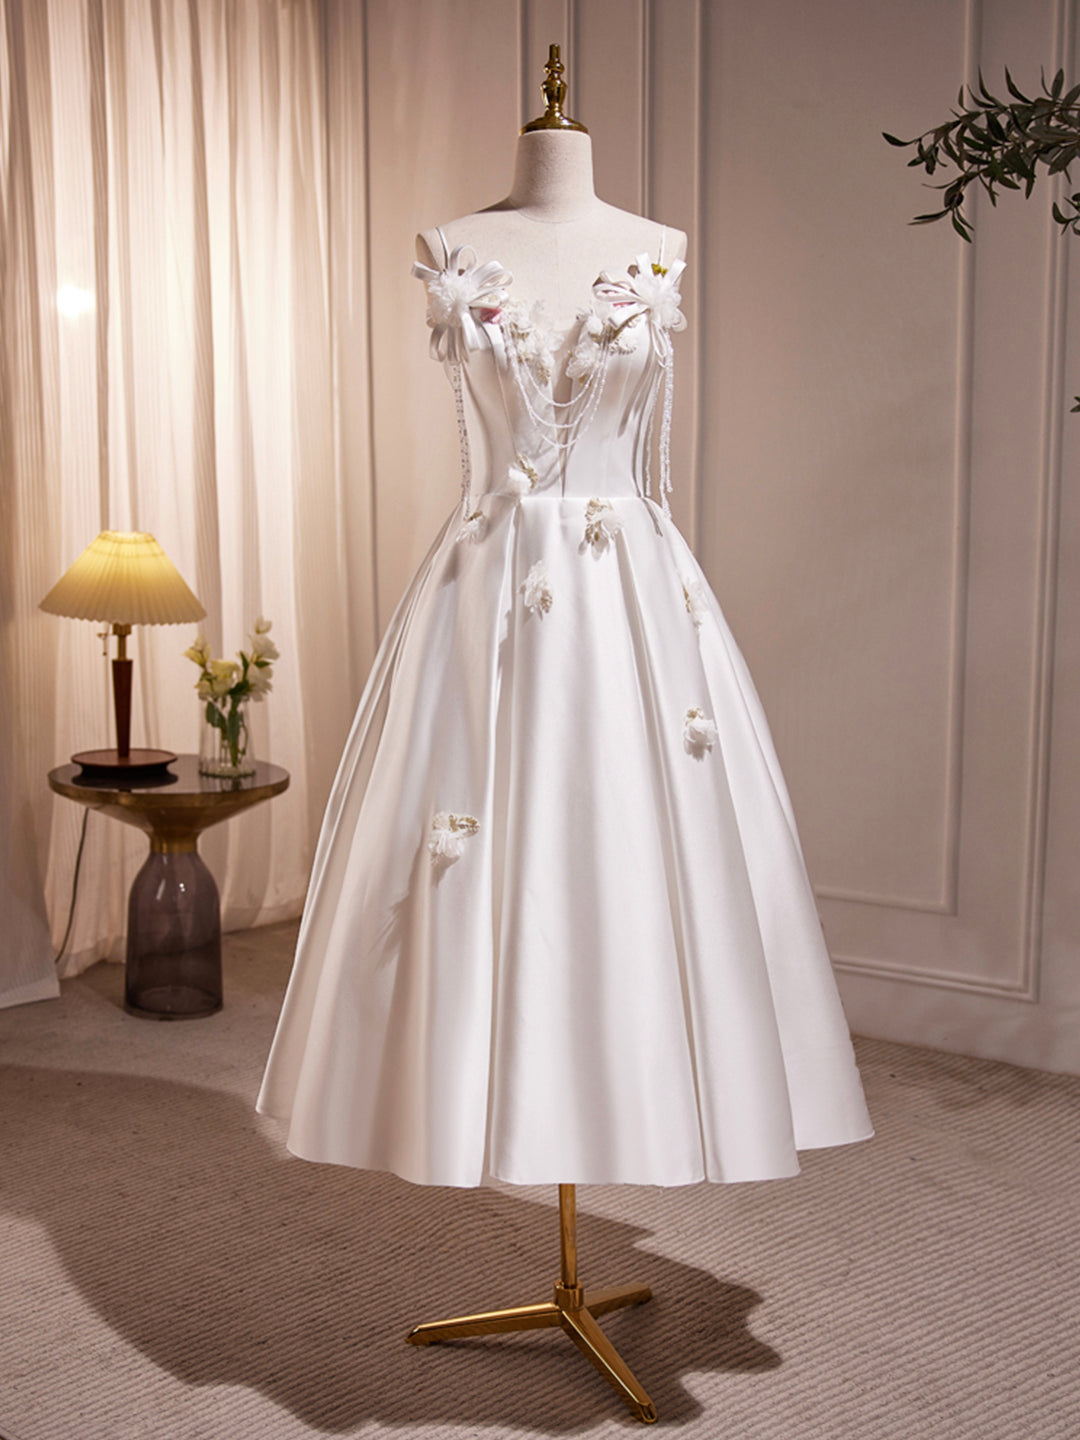 White Spaghetti Strap Satin Short Corset Prom Dress, White V-Neck Evening Party Dress Outfits, Party Dress Set